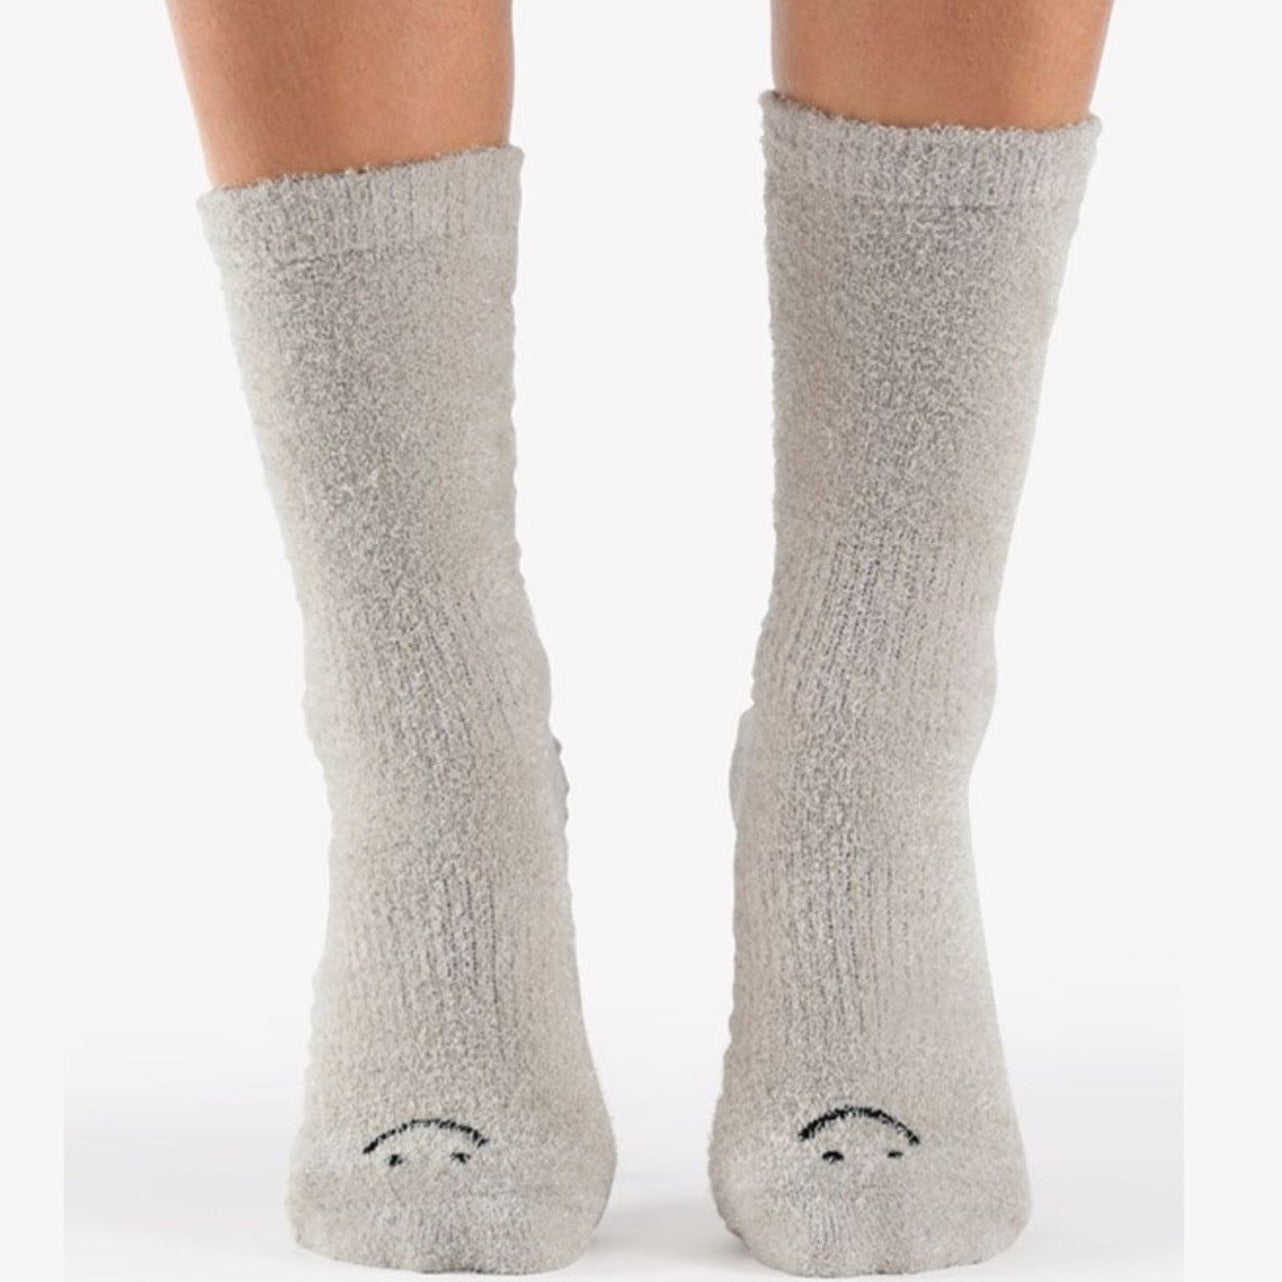 Gripjoy Socks Women's Dark Grey Fuzzy Socks with Grips (Pack of 2)